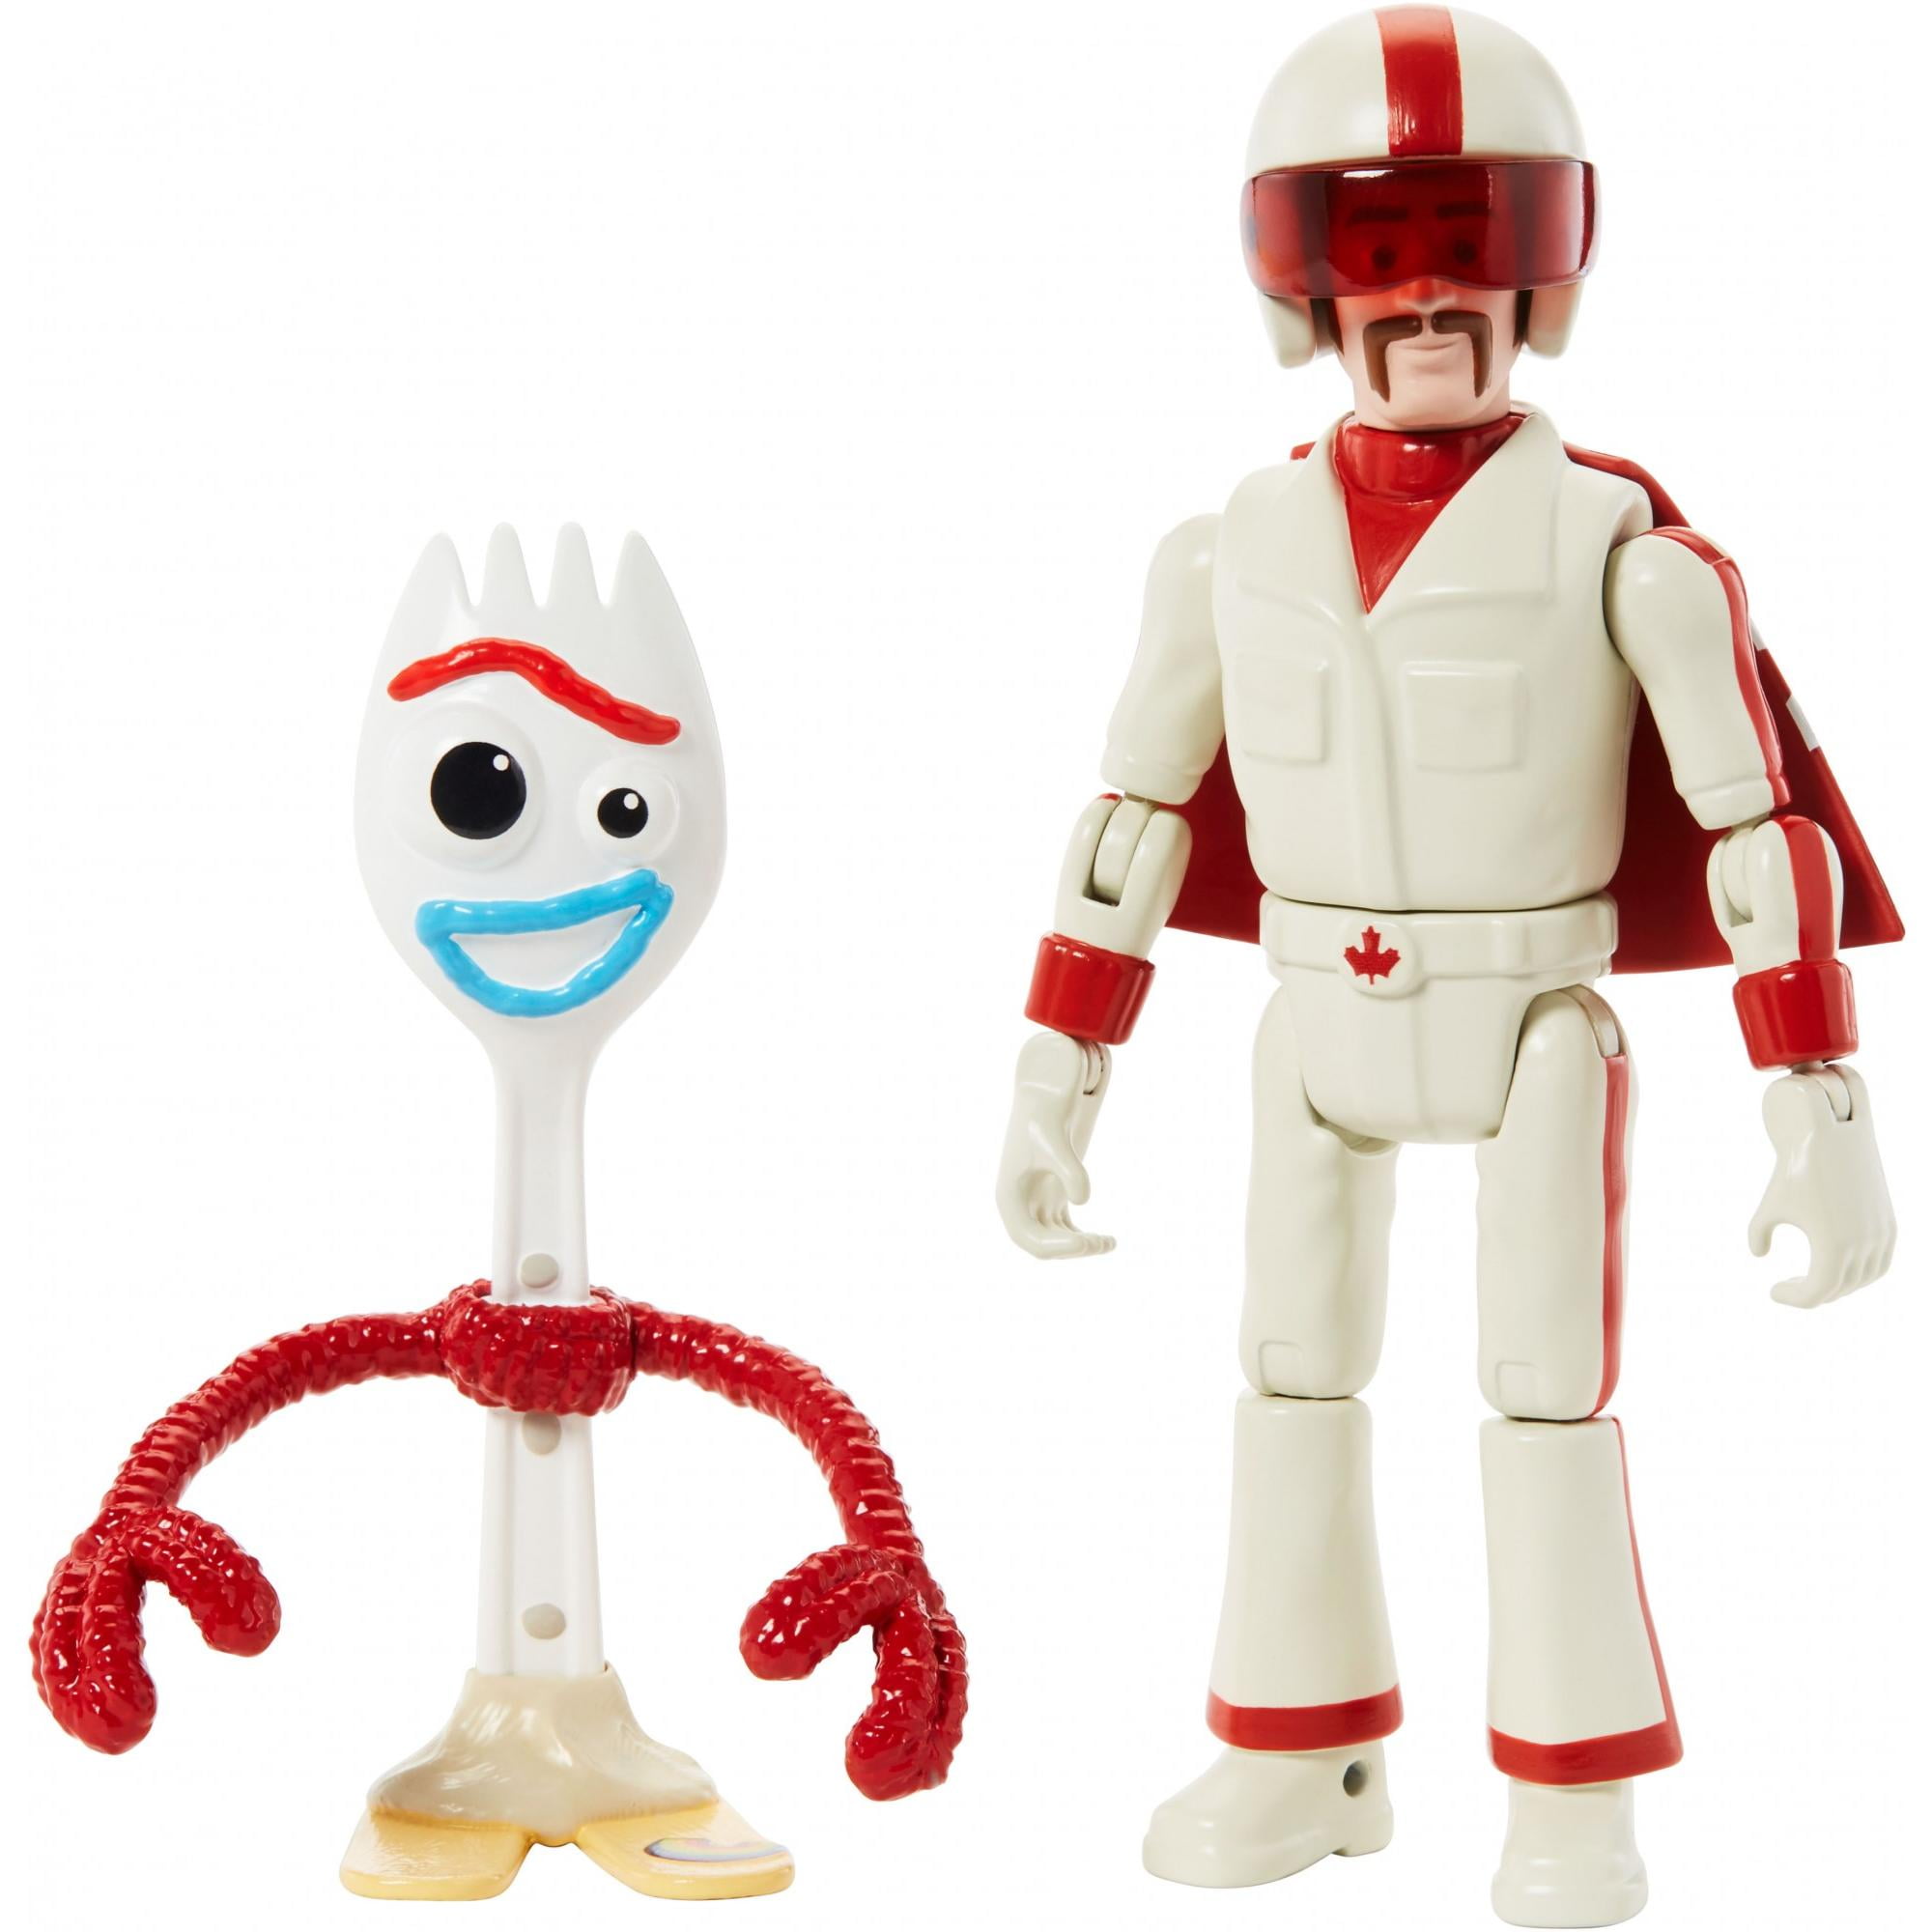 Disney Pixar Toy Story Forky Duke Caboom Figure Set Walmart